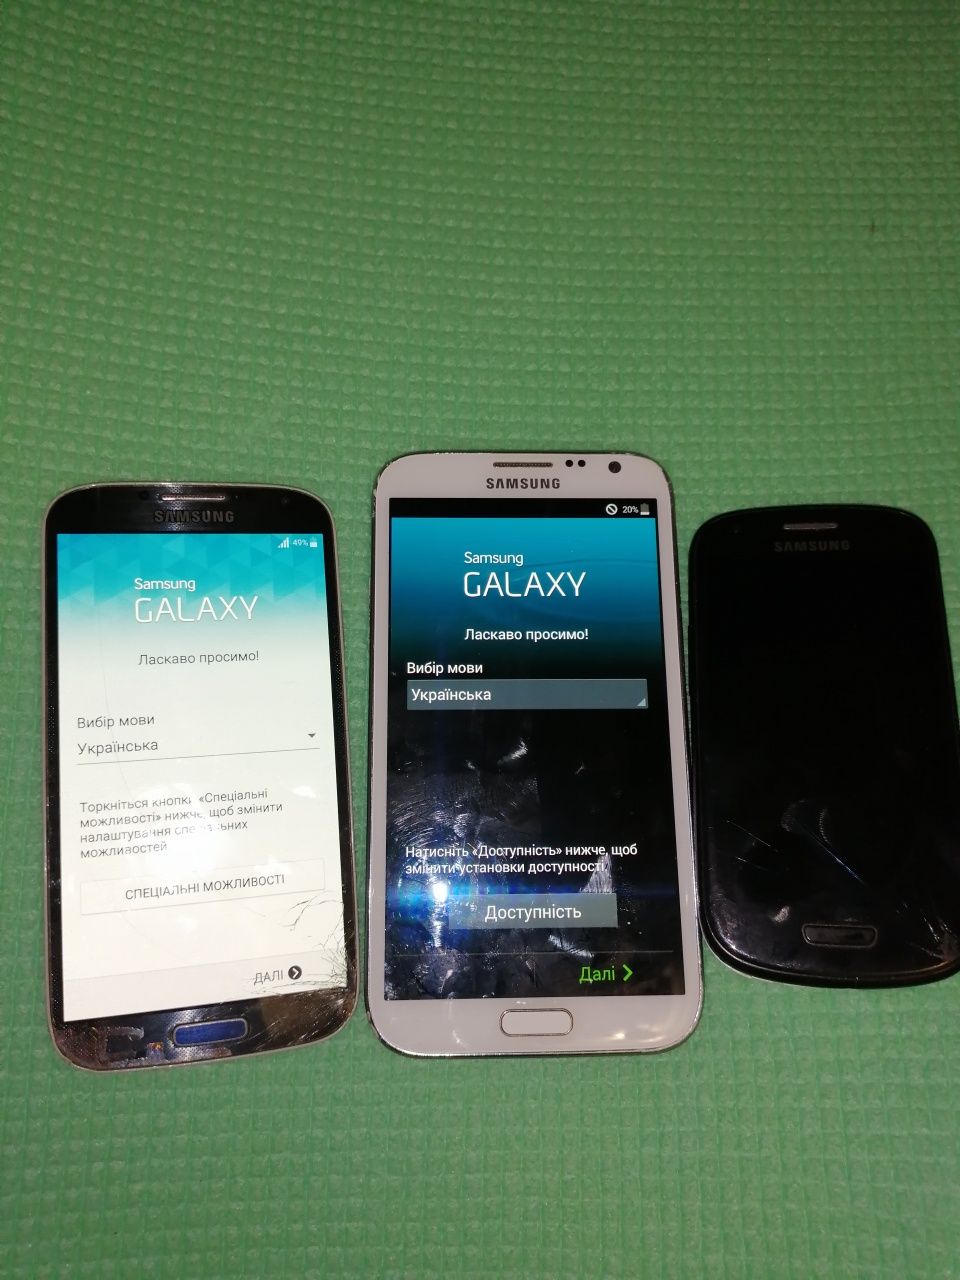 Samsung s3 Mini, s4, note 2